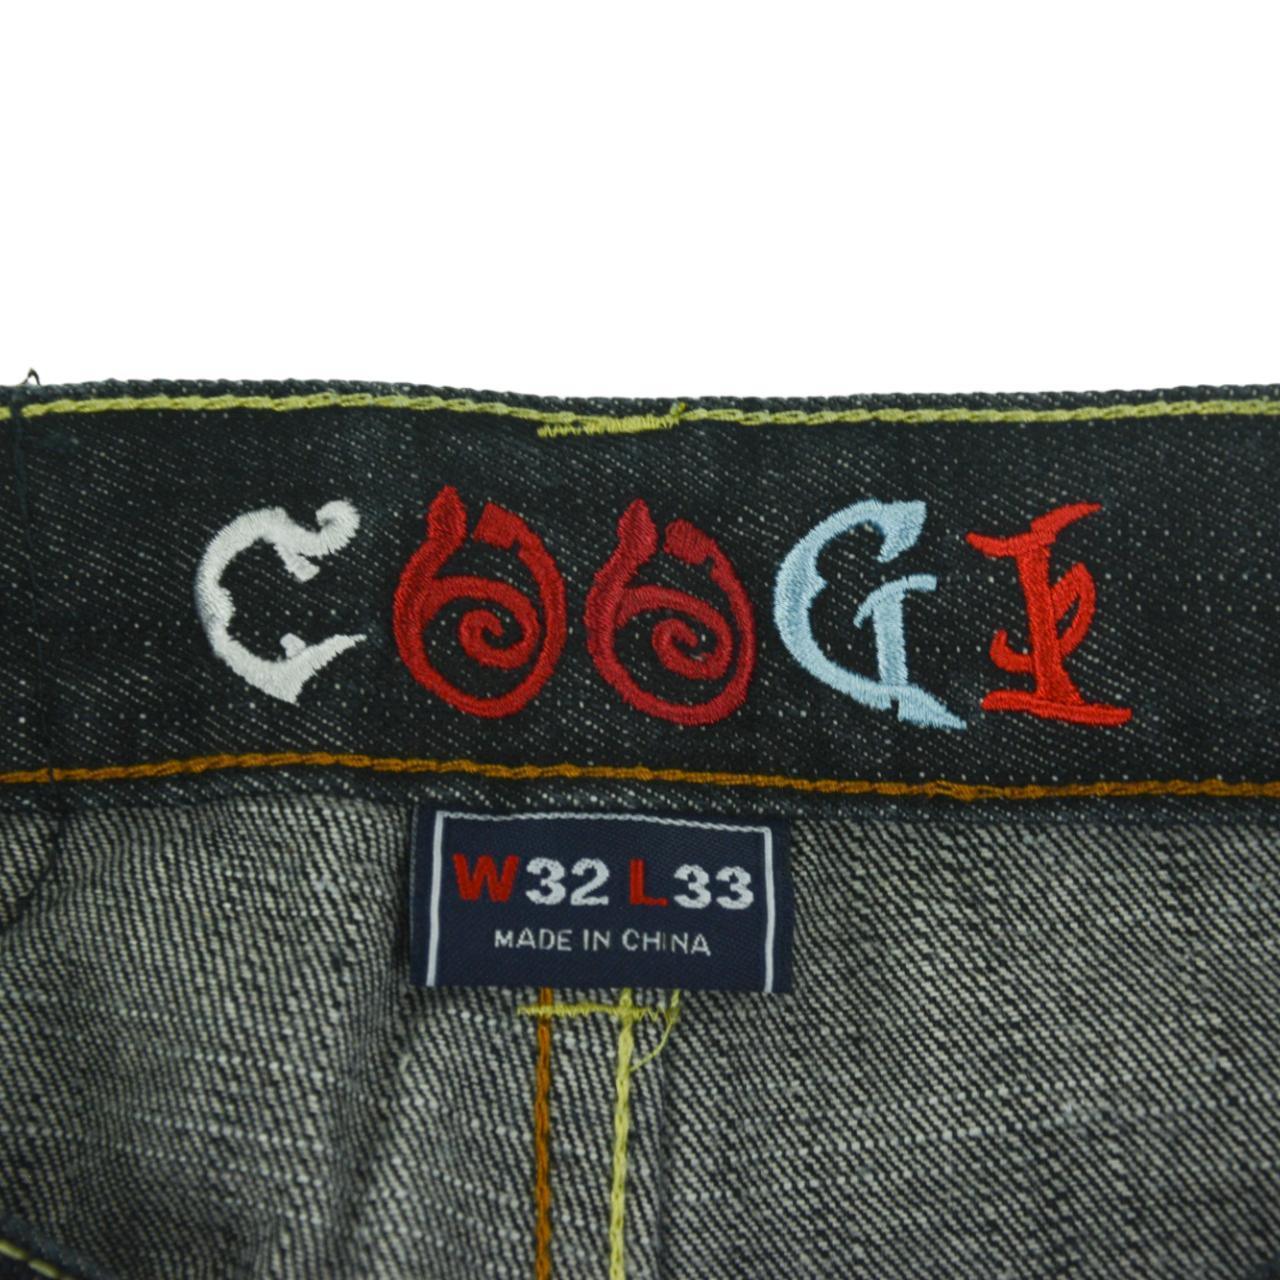 Vintage Coogi Tribal Denim Jeans Size W31 - Known Source